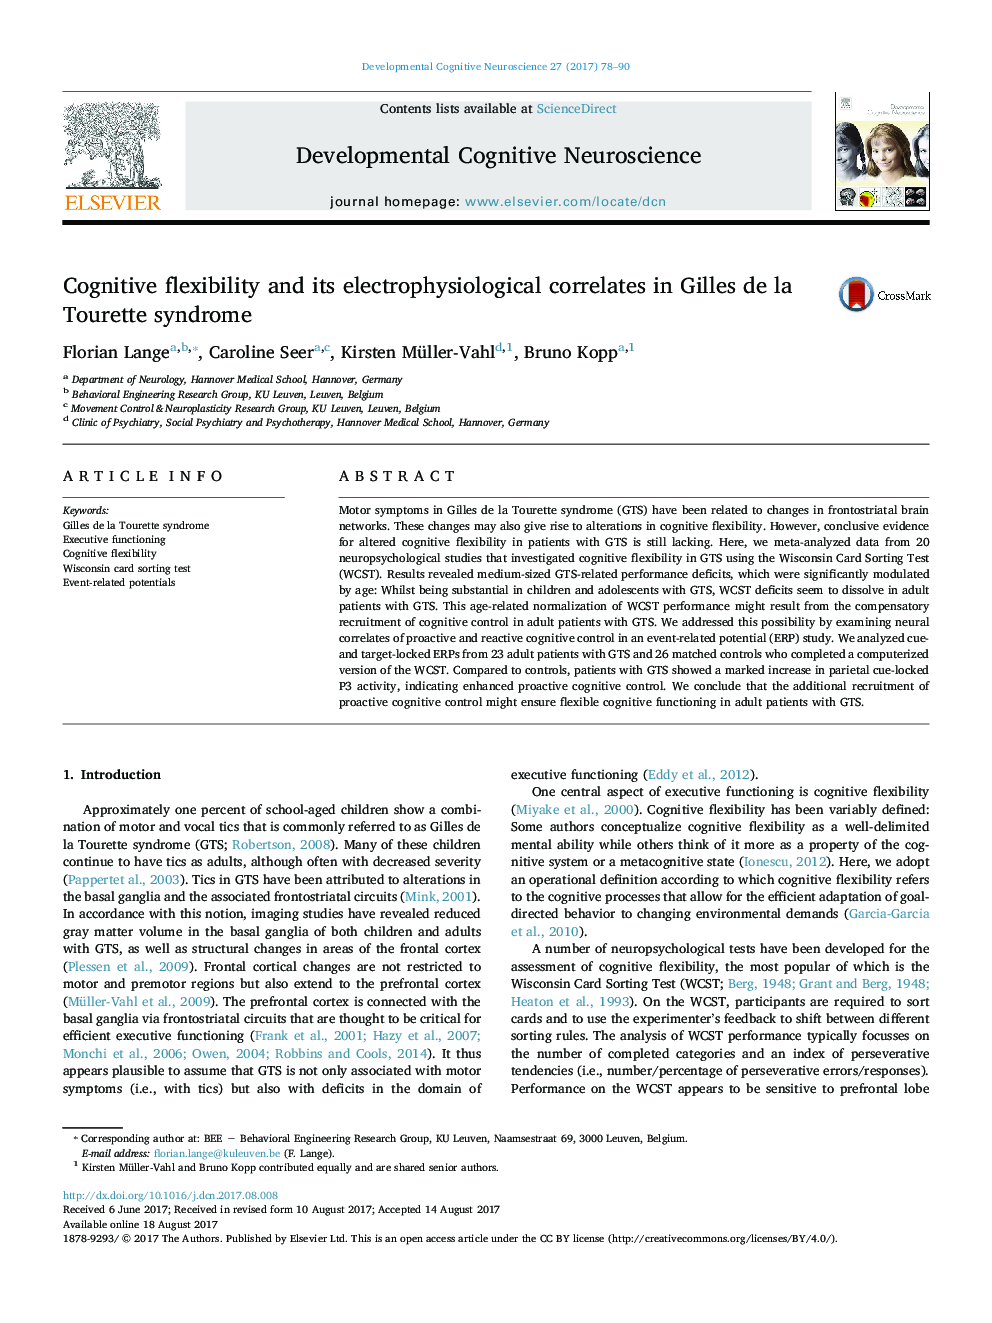 Cognitive flexibility and its electrophysiological correlates in Gilles de la Tourette syndrome